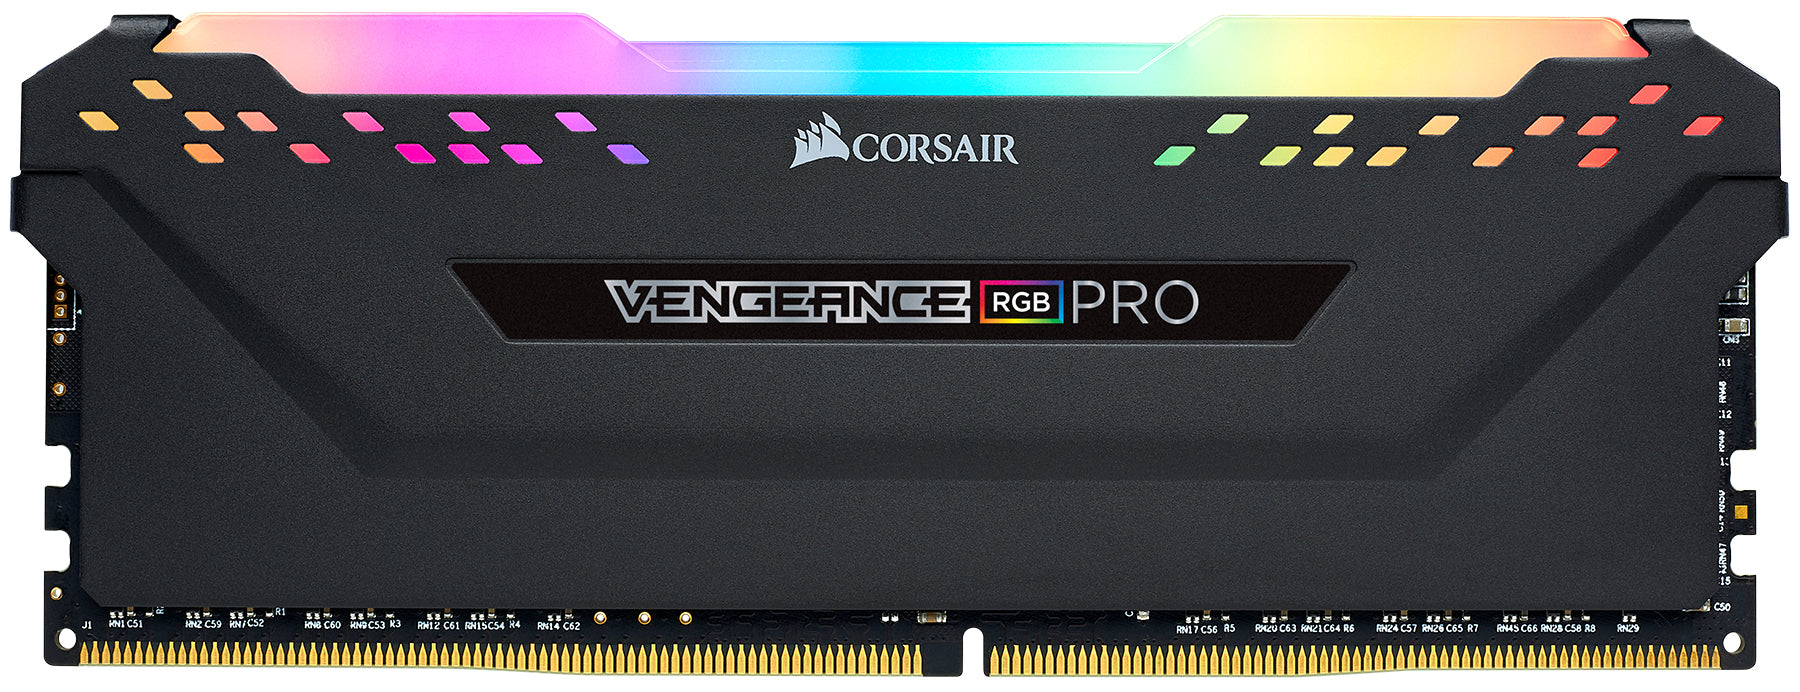 Corsair Vengeance Rgb Pro 32Gb Memory Kit (4 X 8Gb) DDR4 3600Mhz (Pc4-28800) Cl16 Xmp 2.0 Black-(CMW32GX4M4D3600C16)